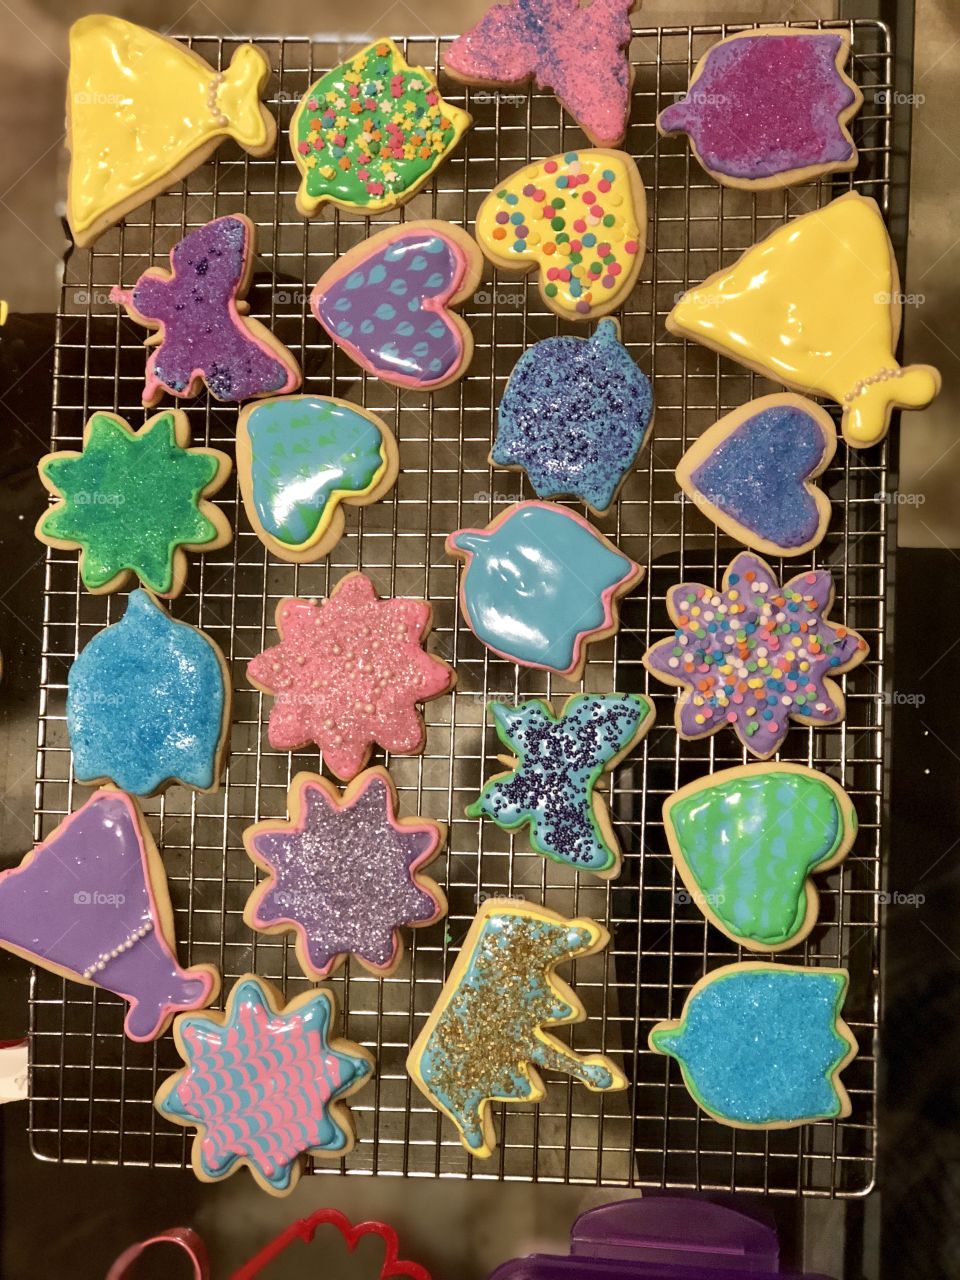 Children’s sugar cookies display 